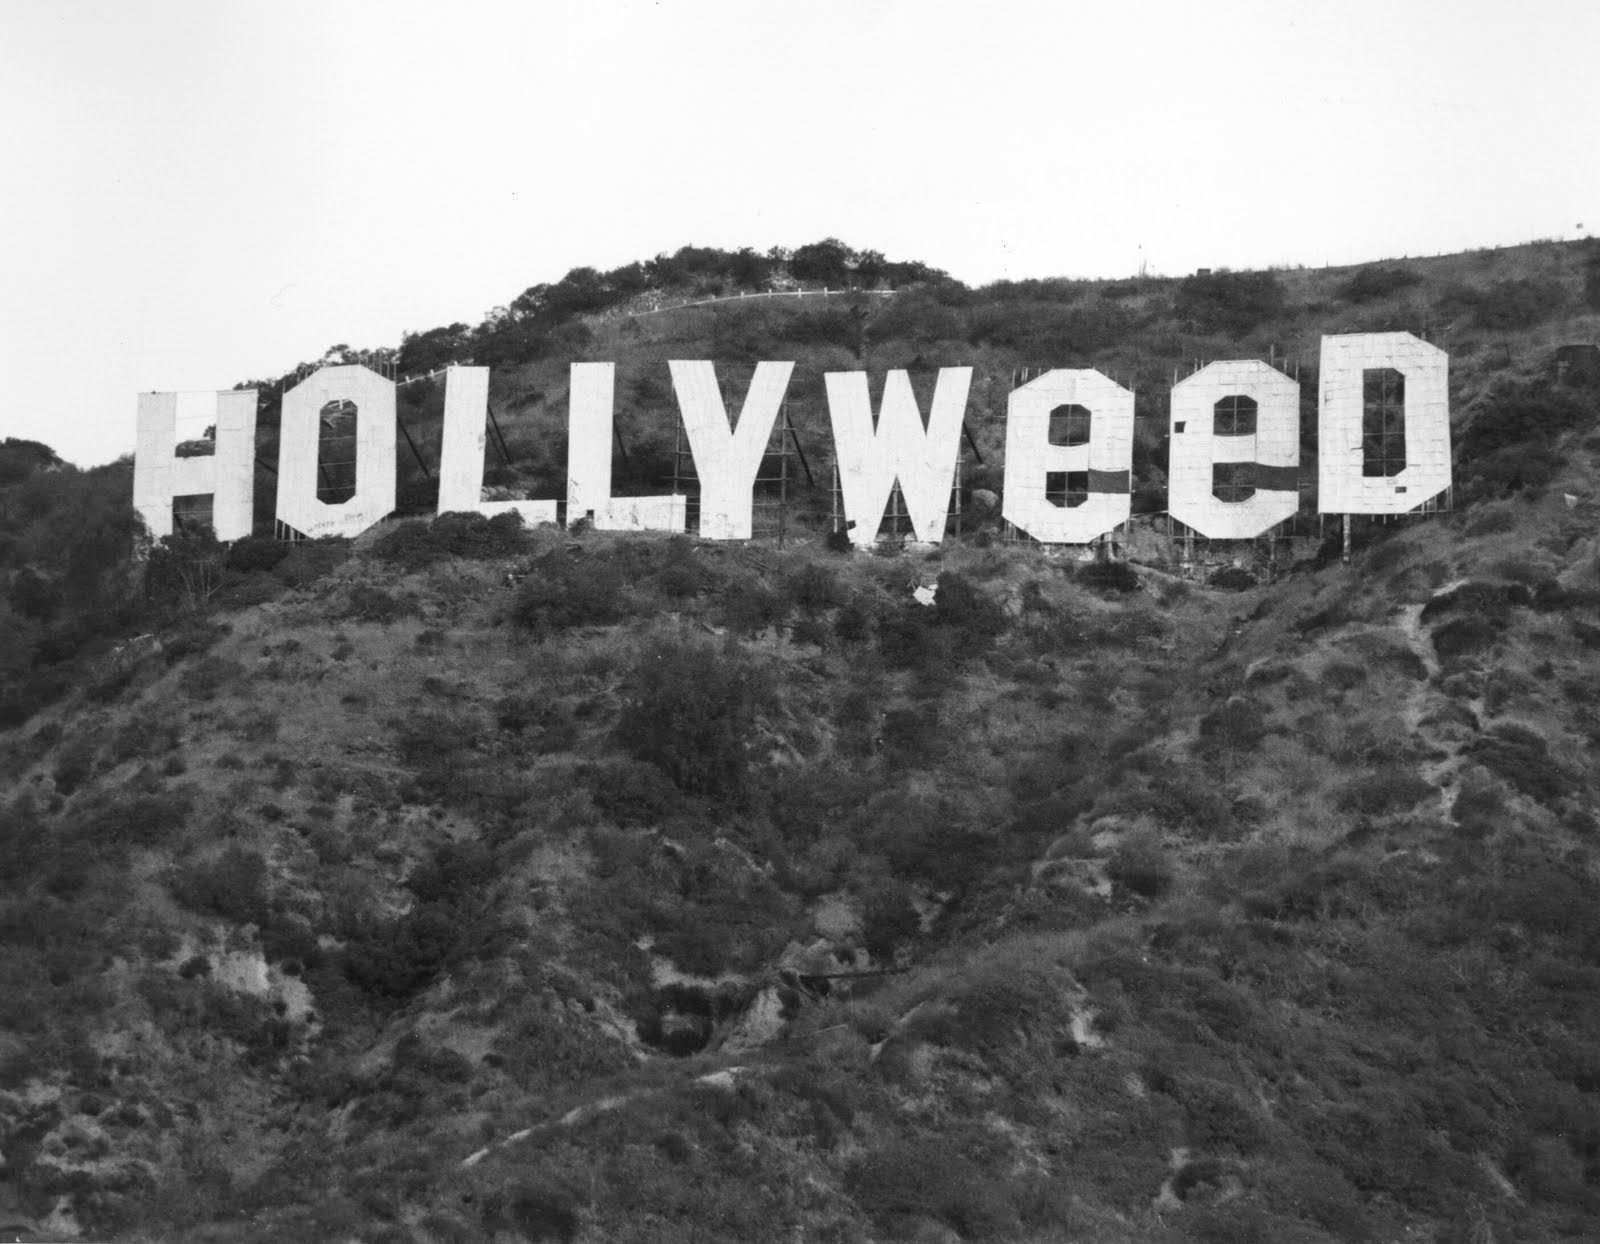 Hollywood aka Hollywoodland Los Angeles suburb famous sign surveying Valley1B 